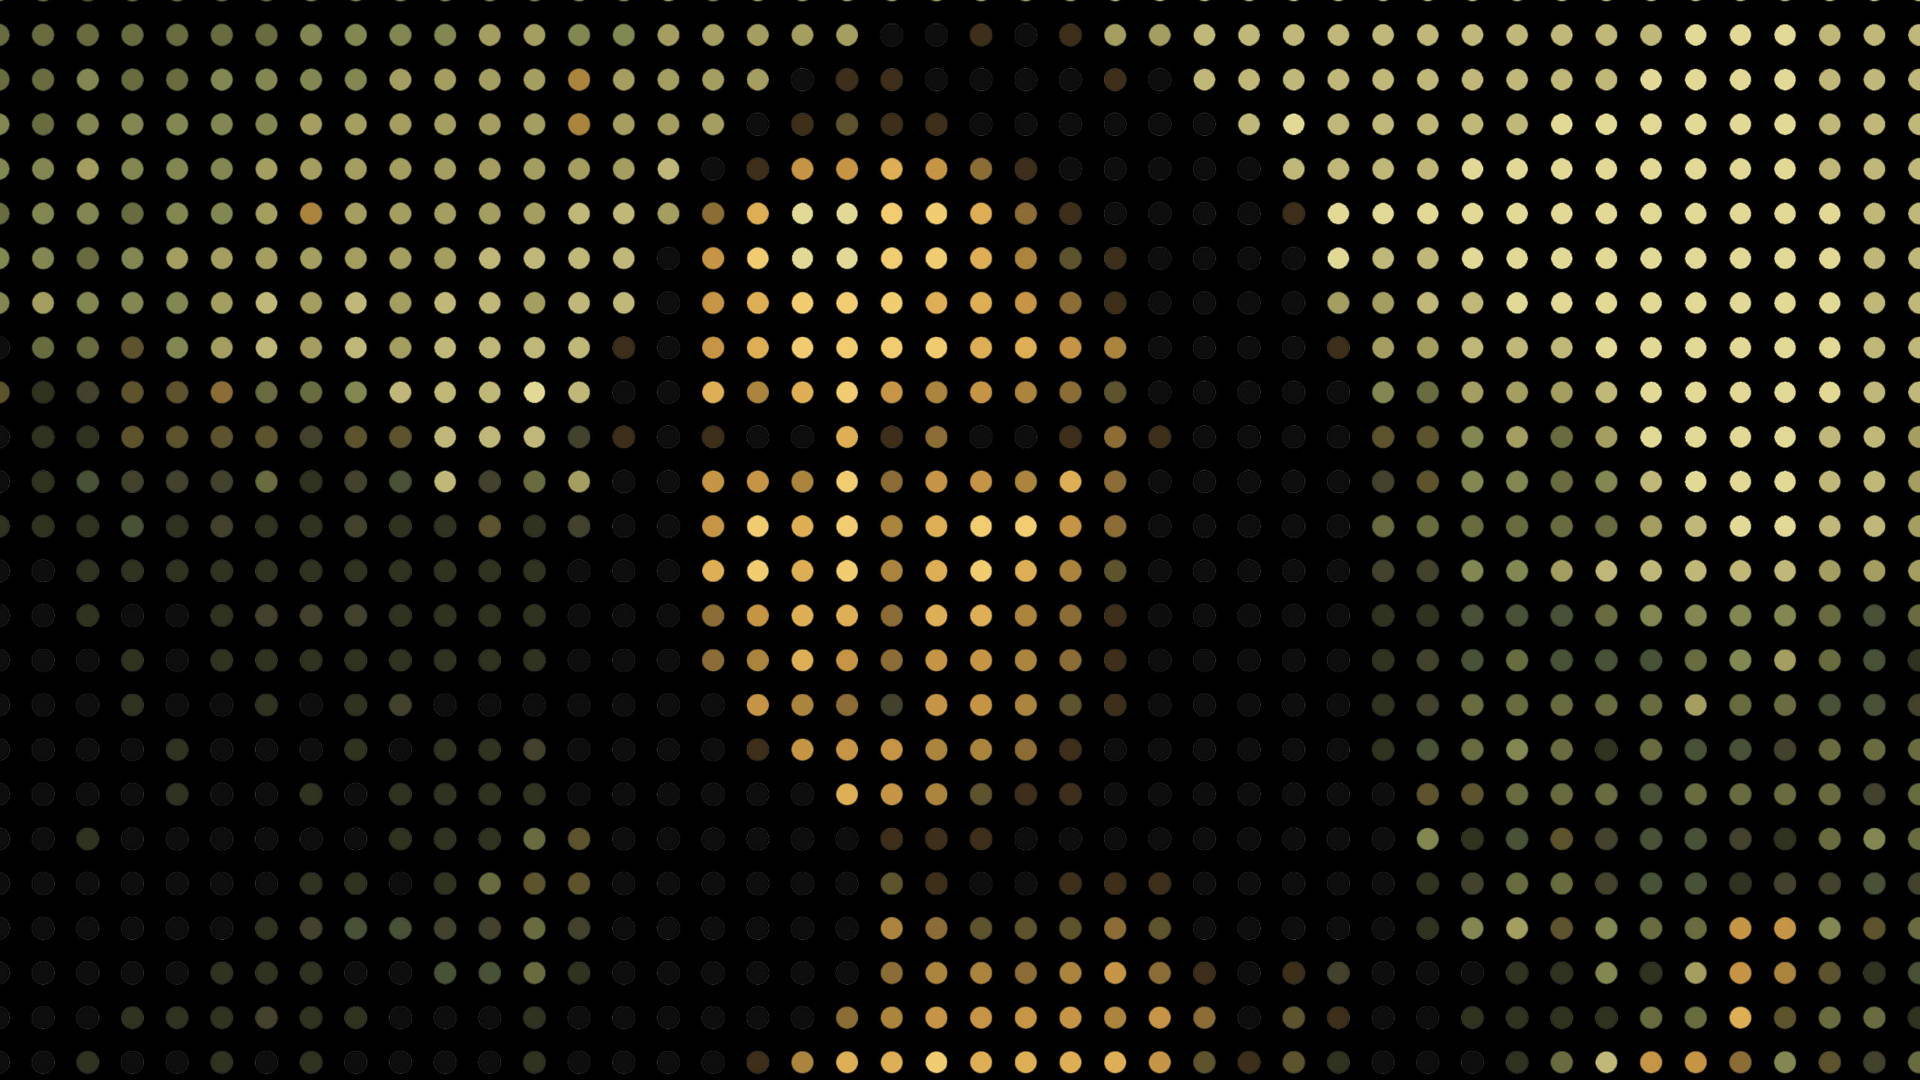 Mona Lisa Art Dots Background